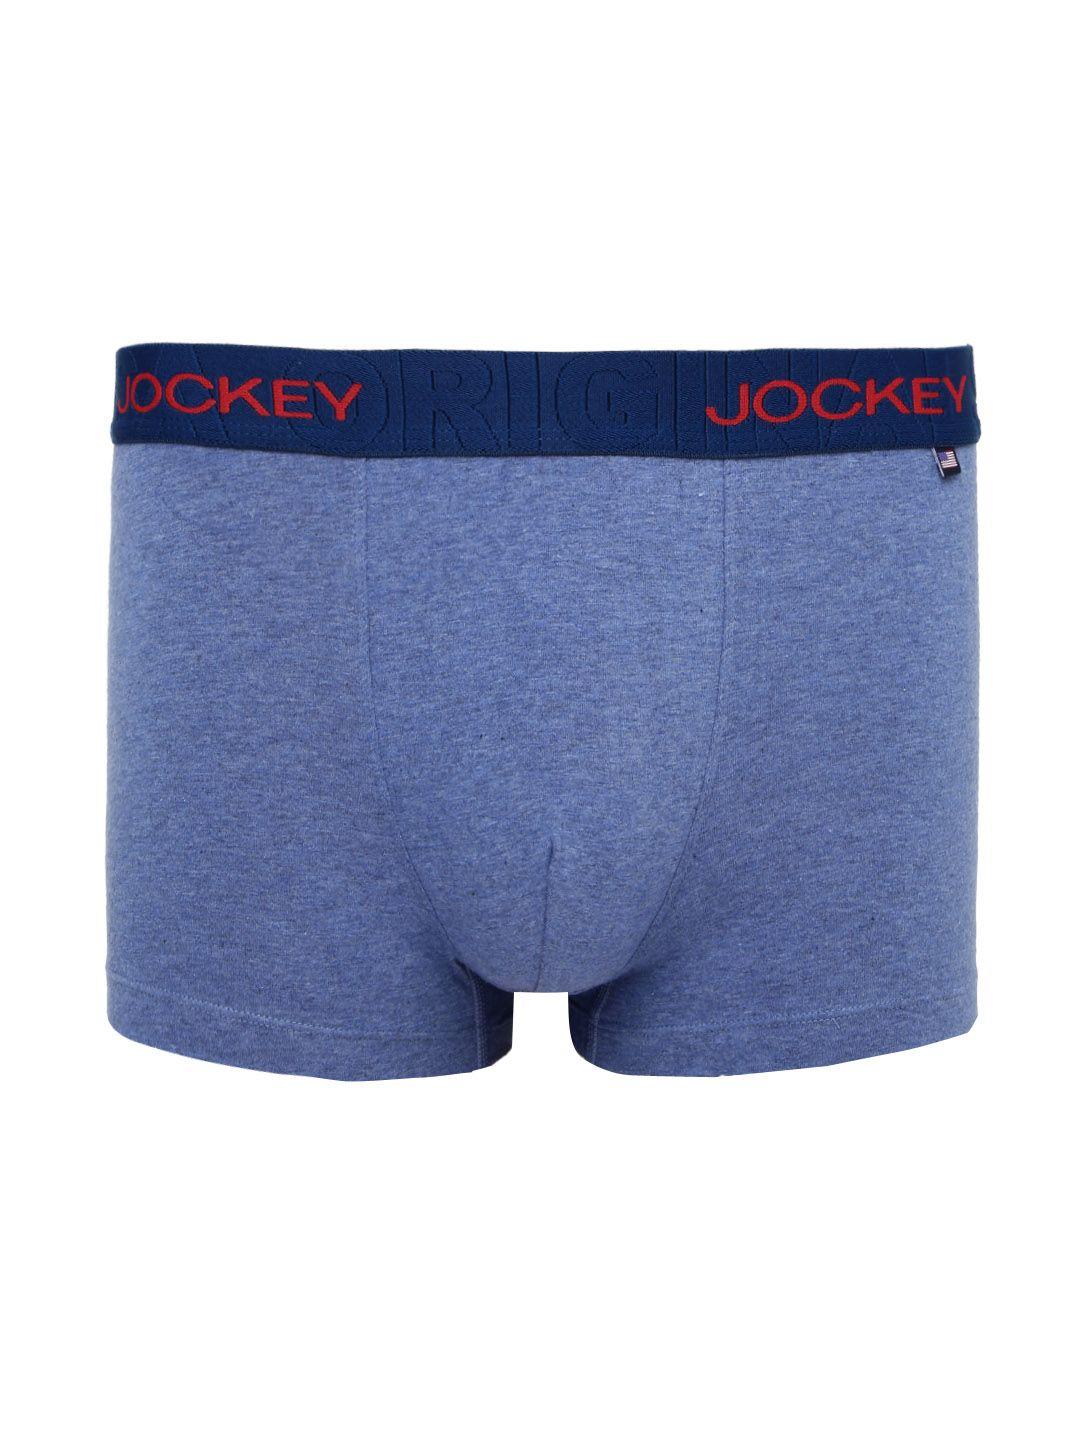 jockey men blue solid trunks us60-0105-ltdml